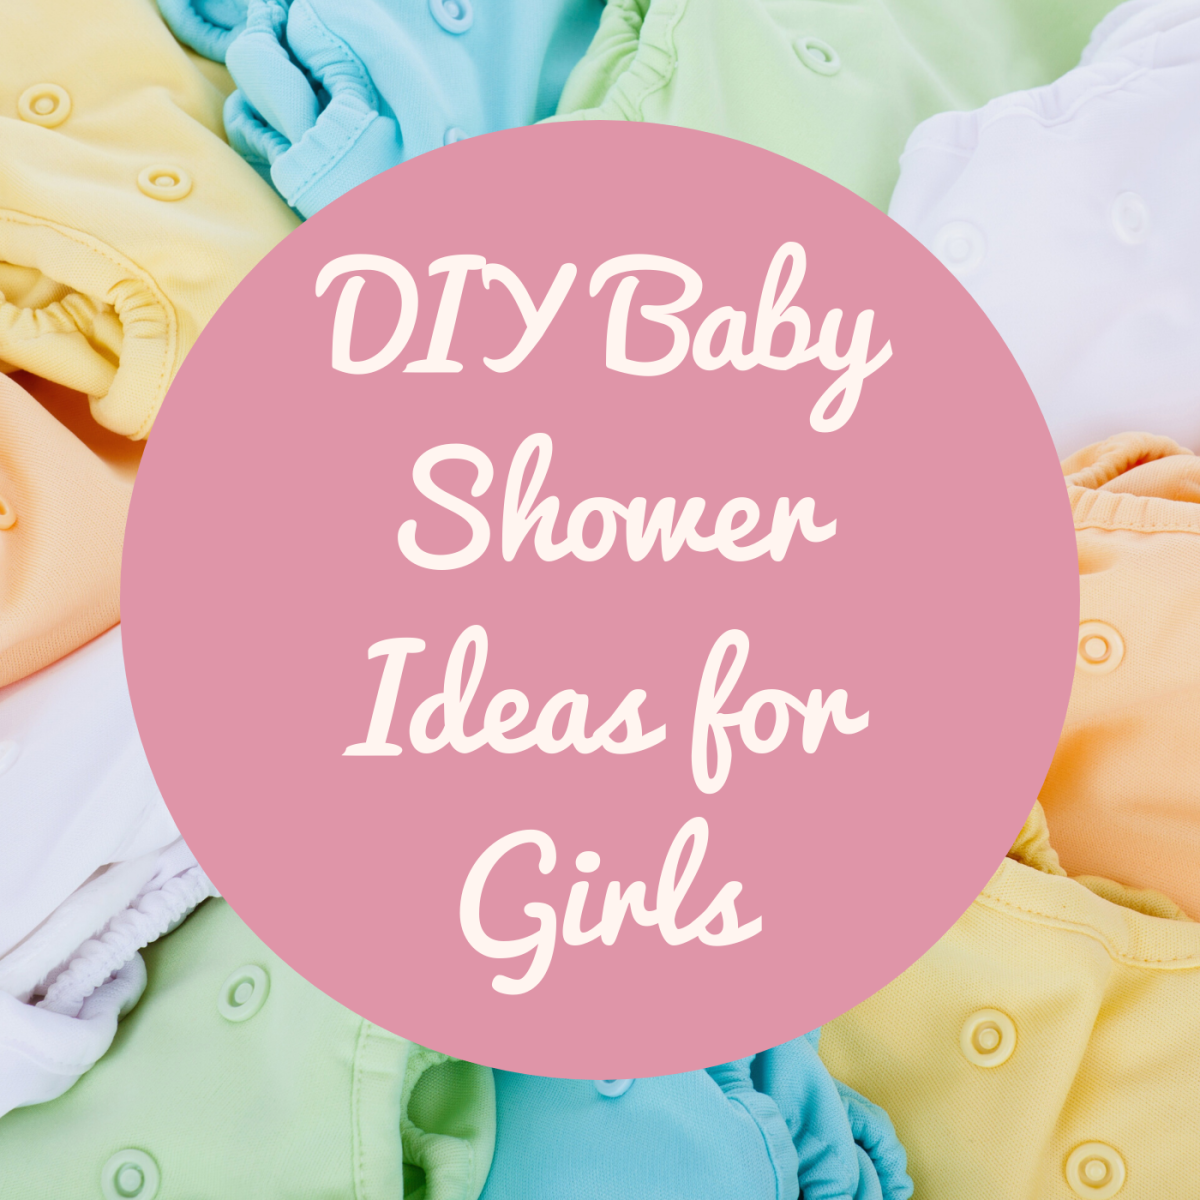 DIY Baby Shower Ideas for Girls